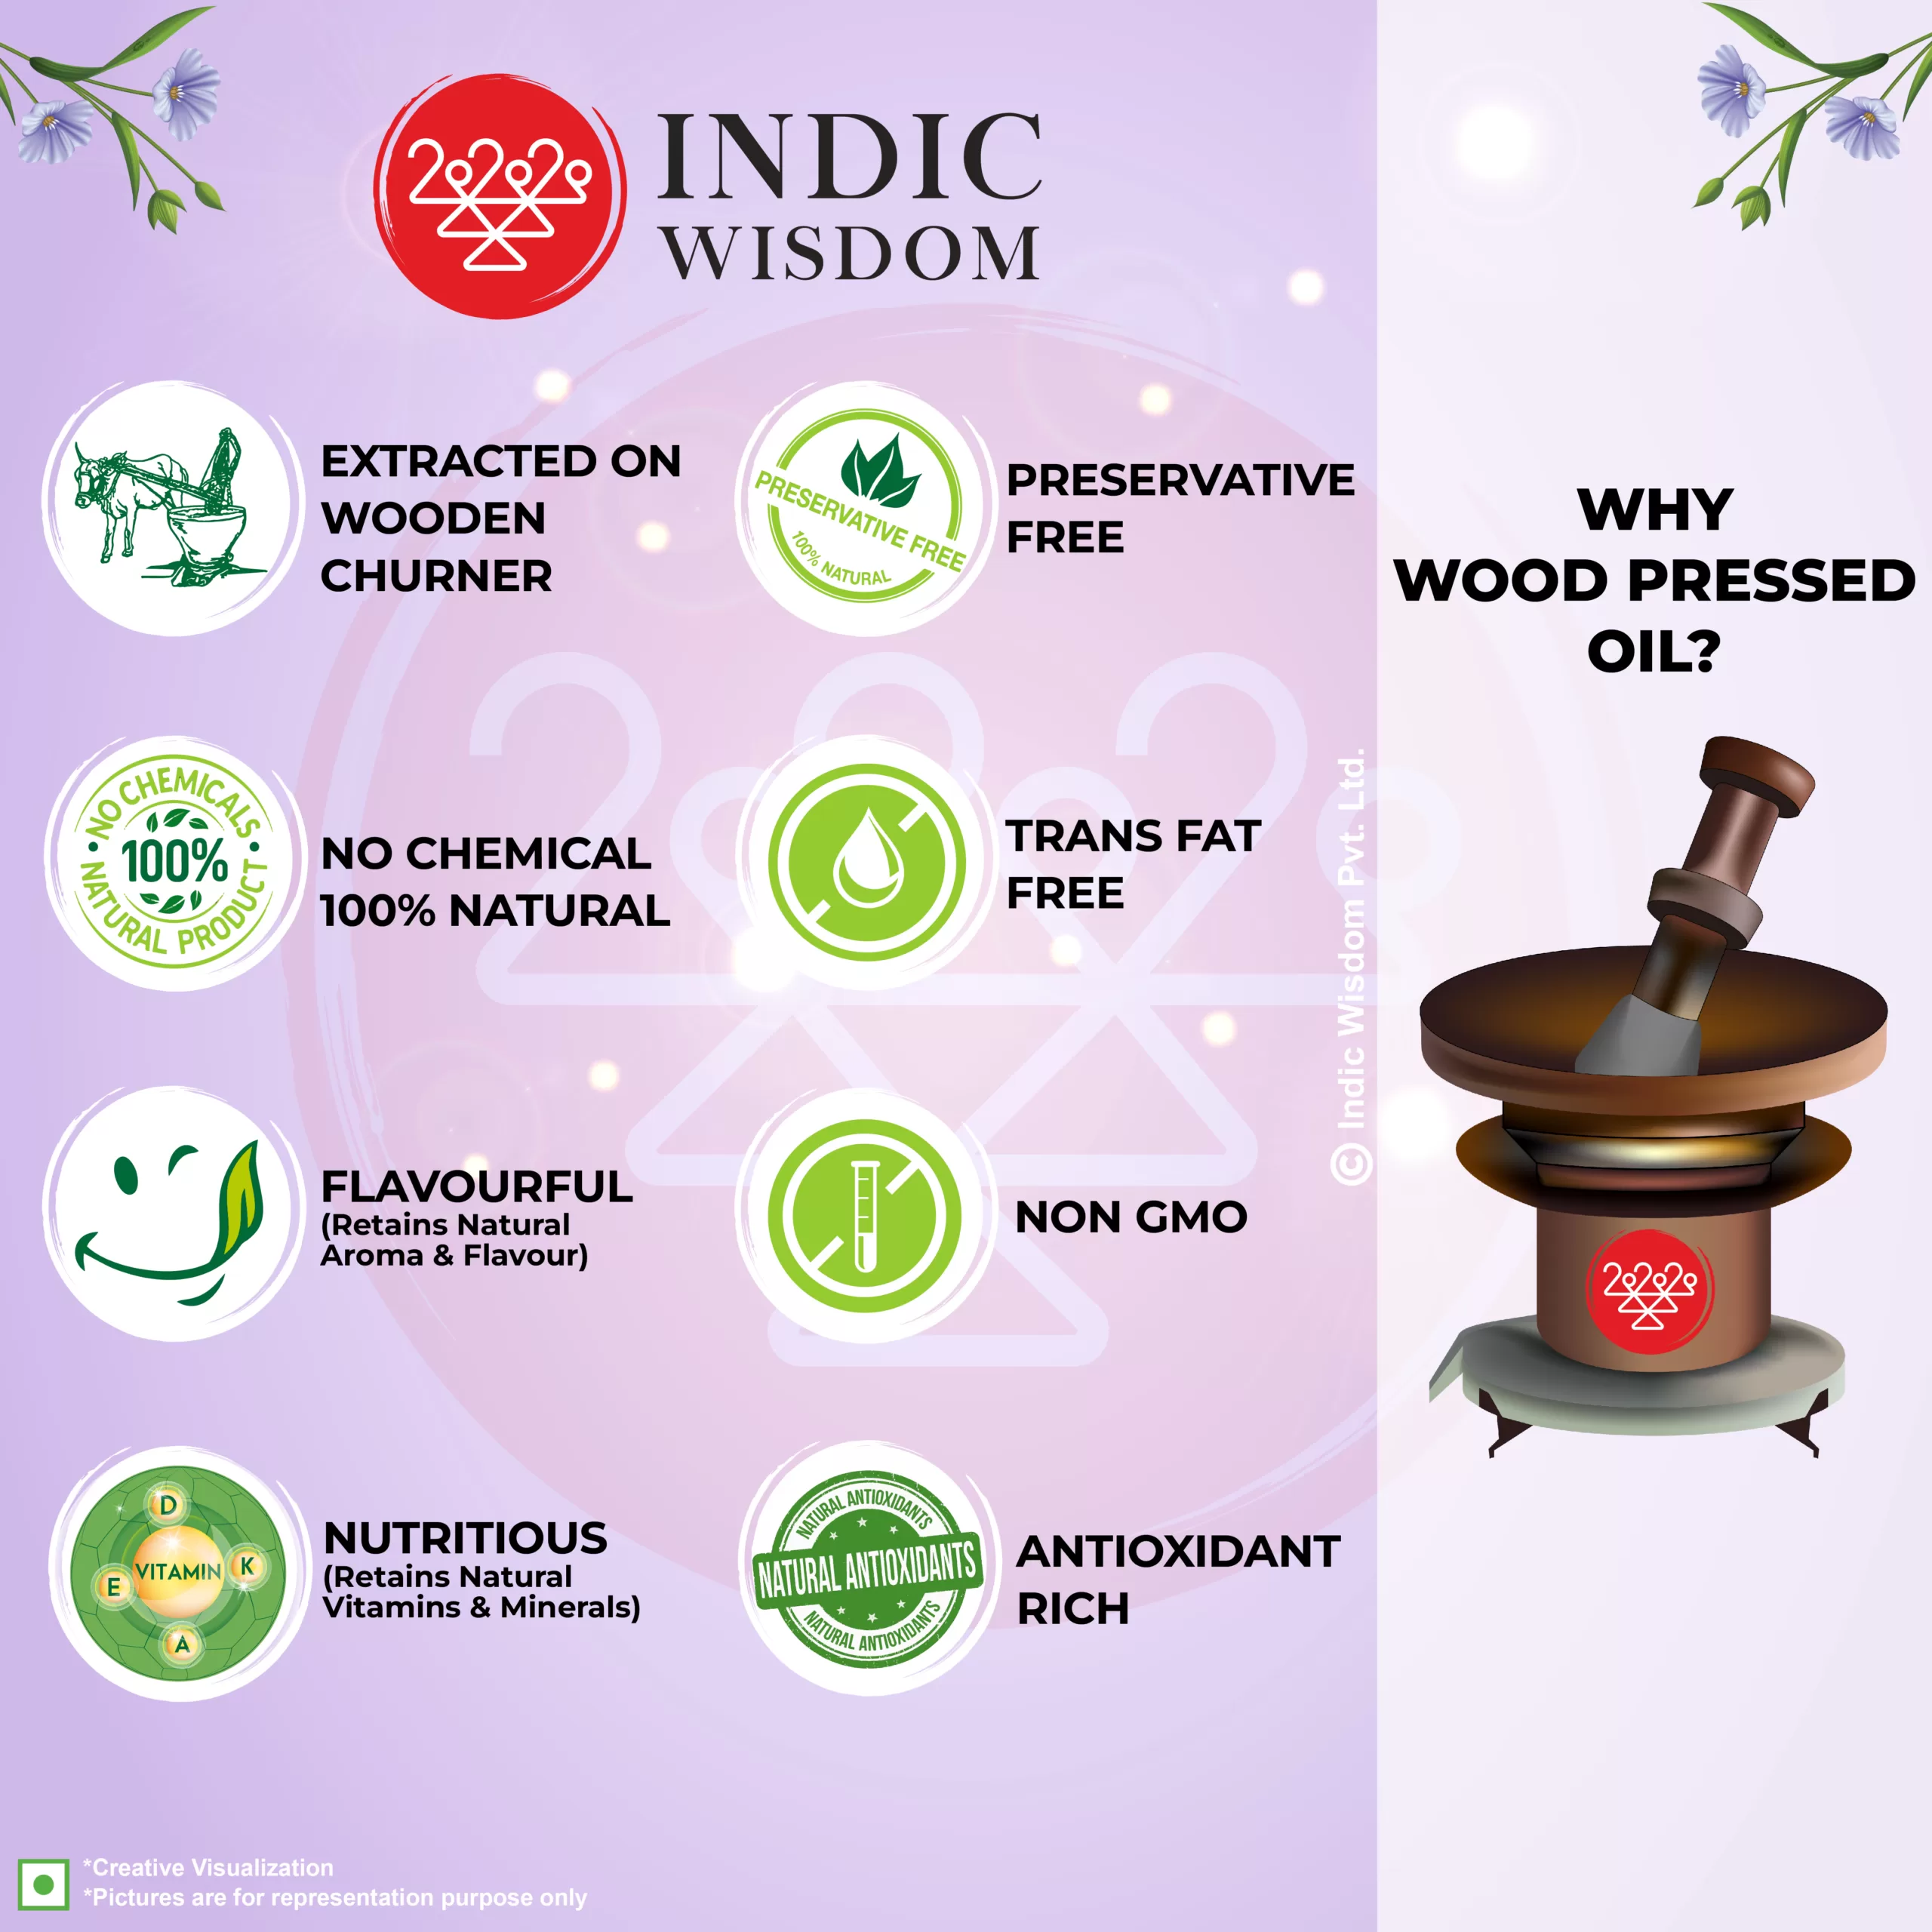 Why wood pressed oil?